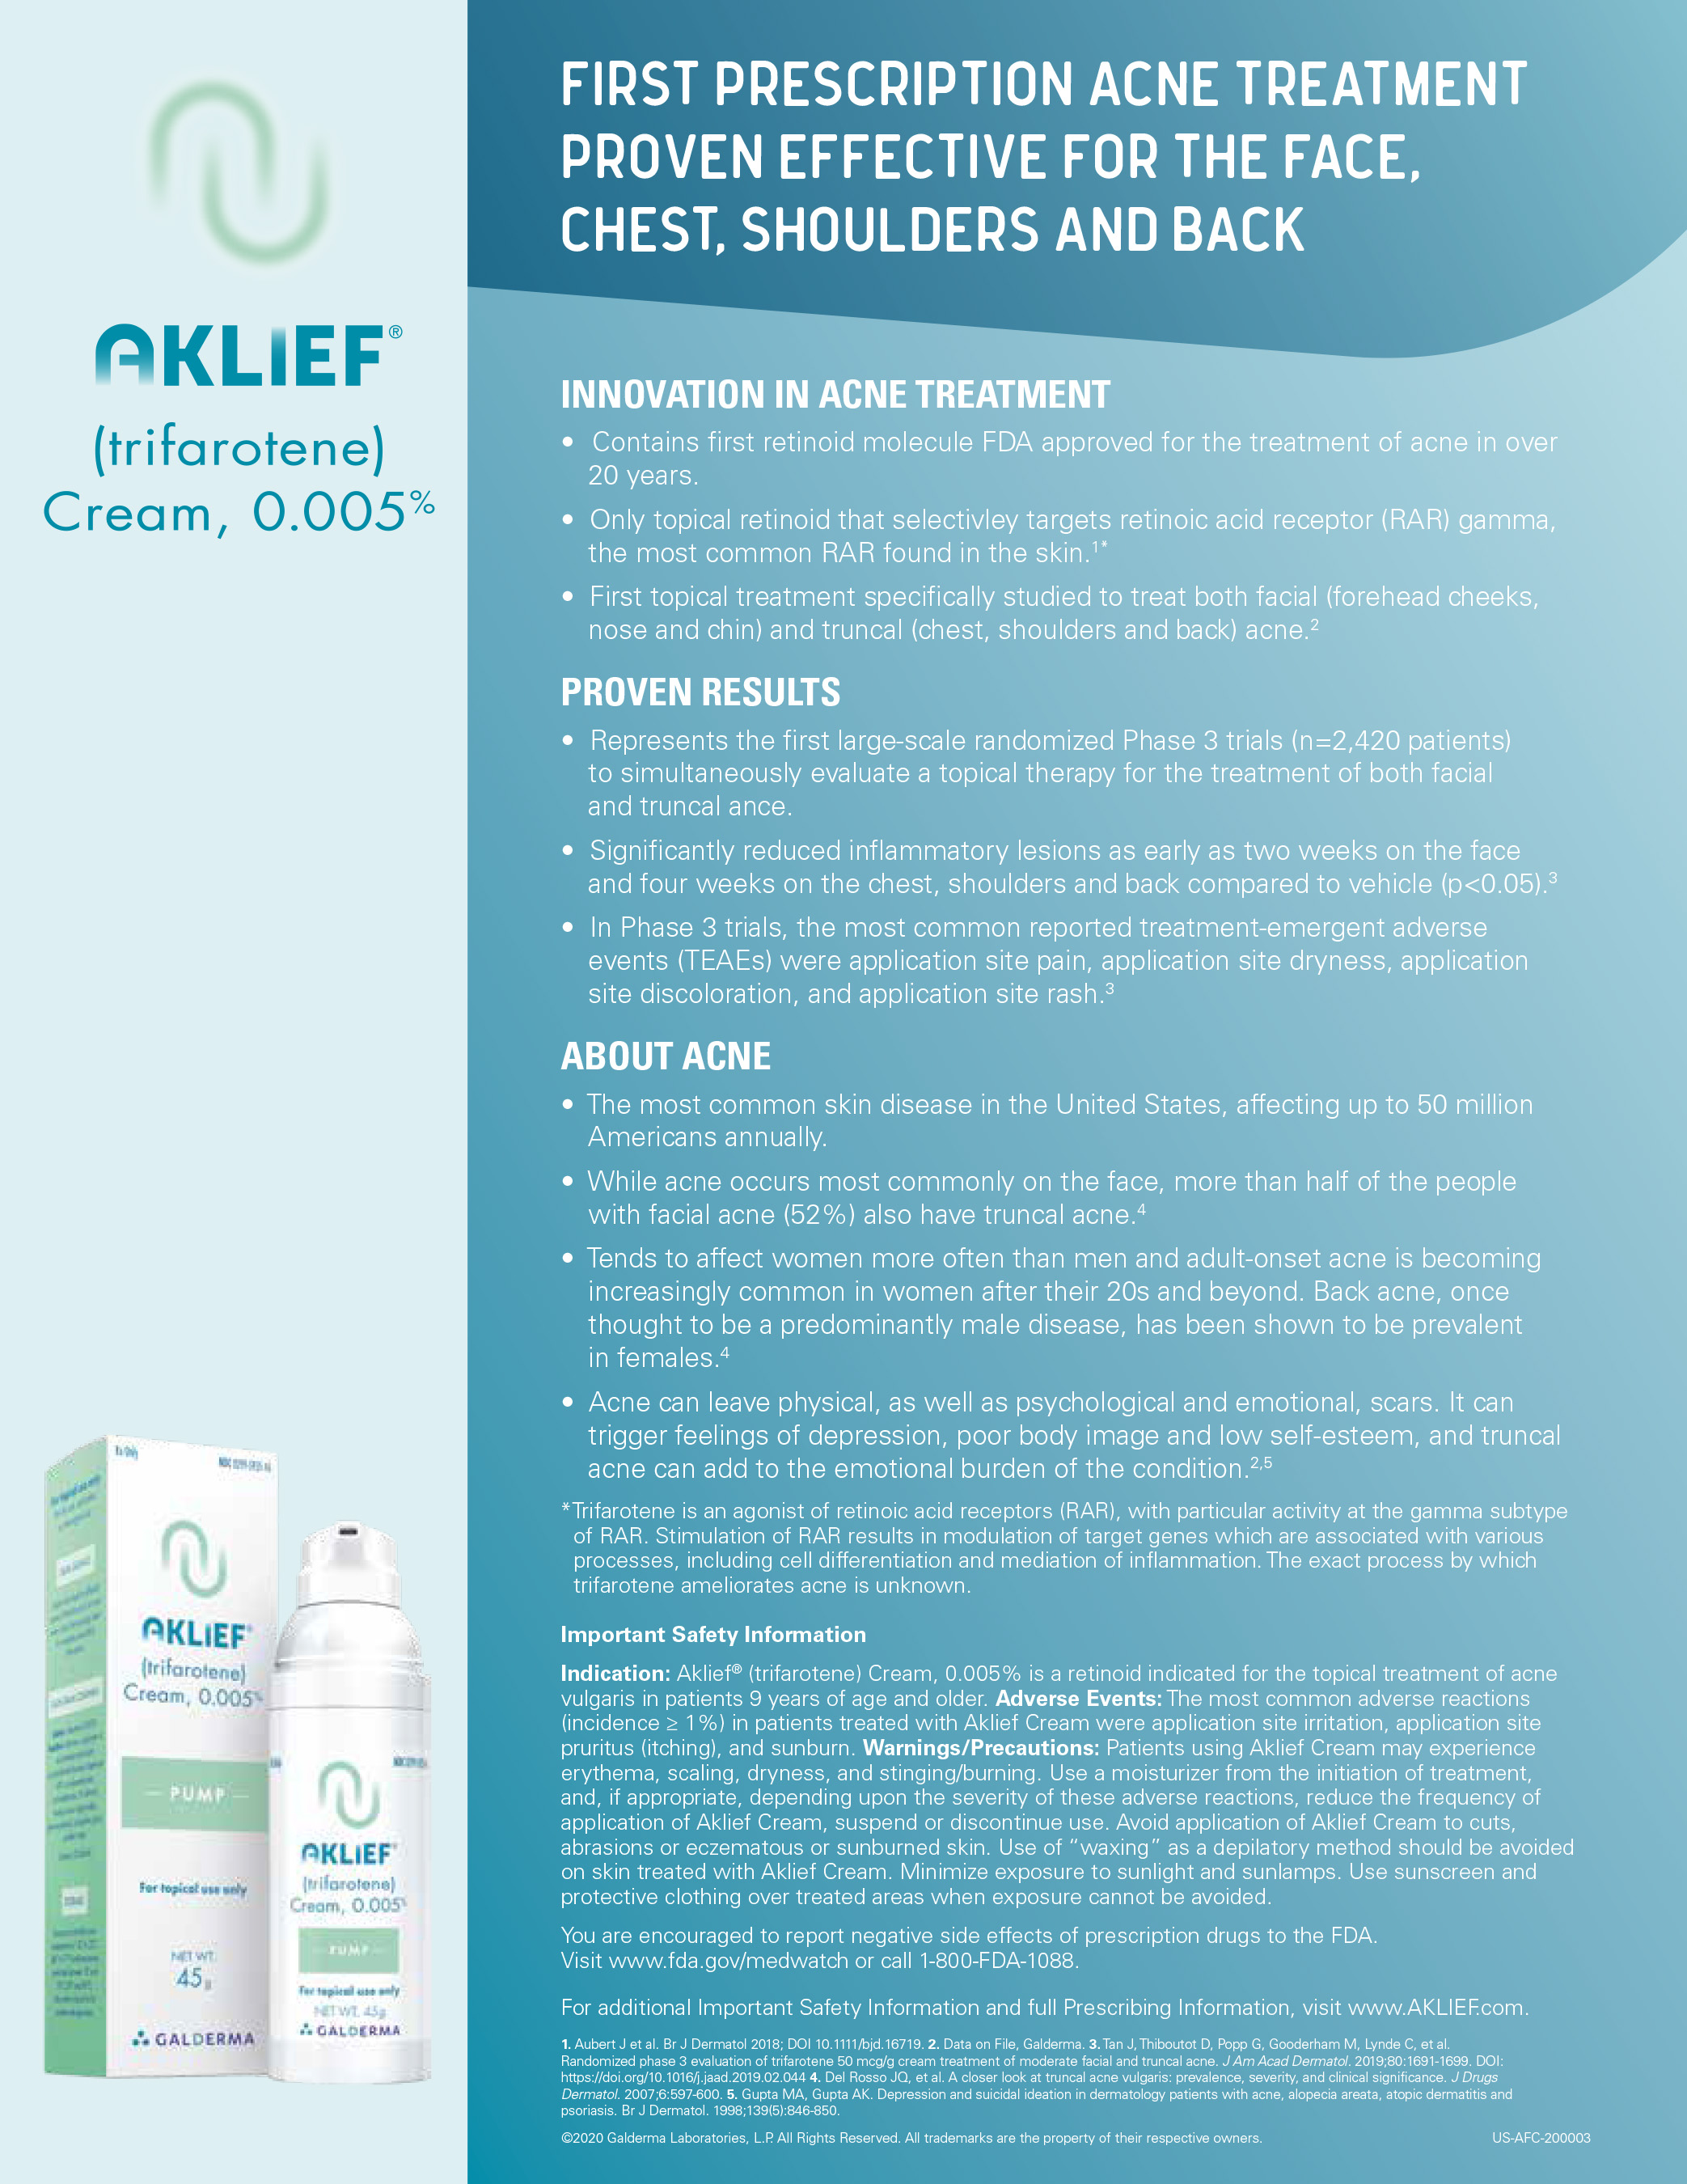 AKLIEF Cream Fact Sheet